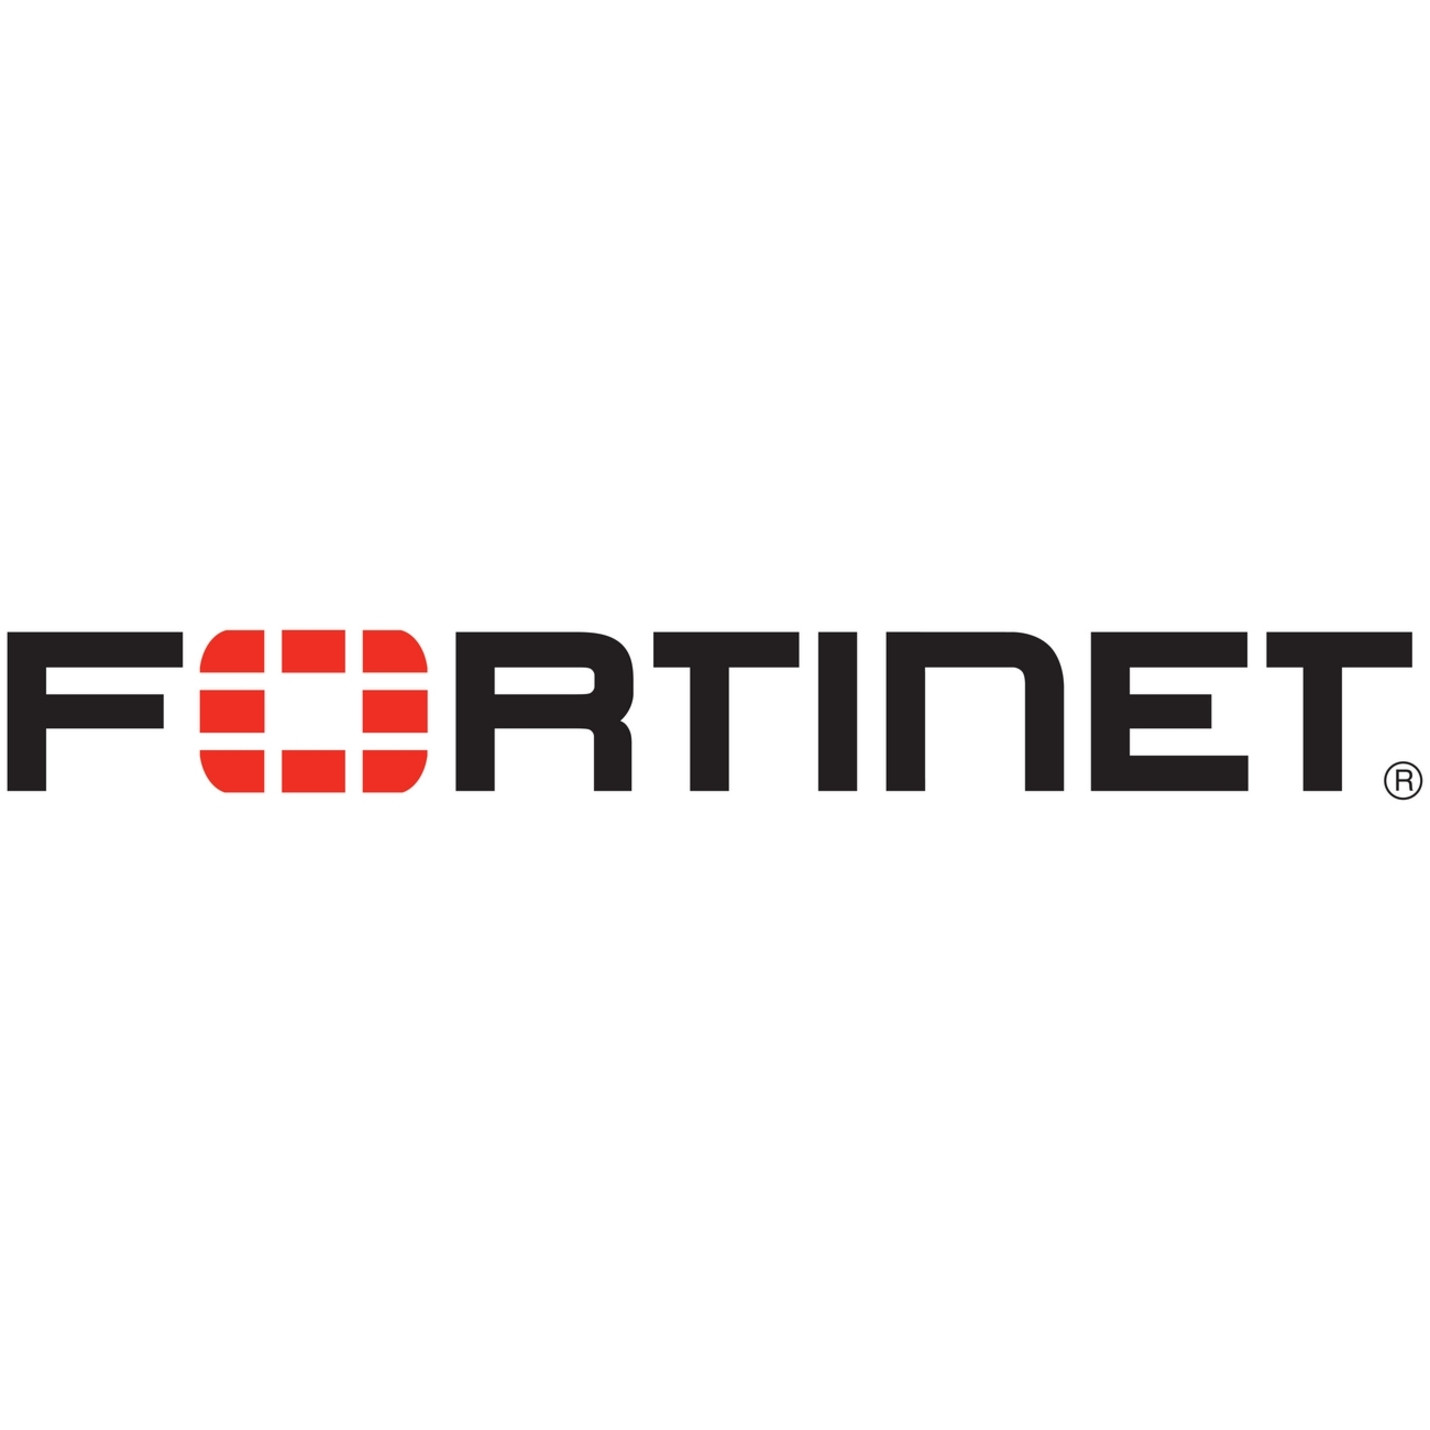 Fortinet Enterprise Bundle (FortiCare plus NGFW, AV, Web Filtering, Antispam, Botnet IP/Domain, FortiSandbox Cloud and Mobile Secu… FC-10-00E80-871-0…